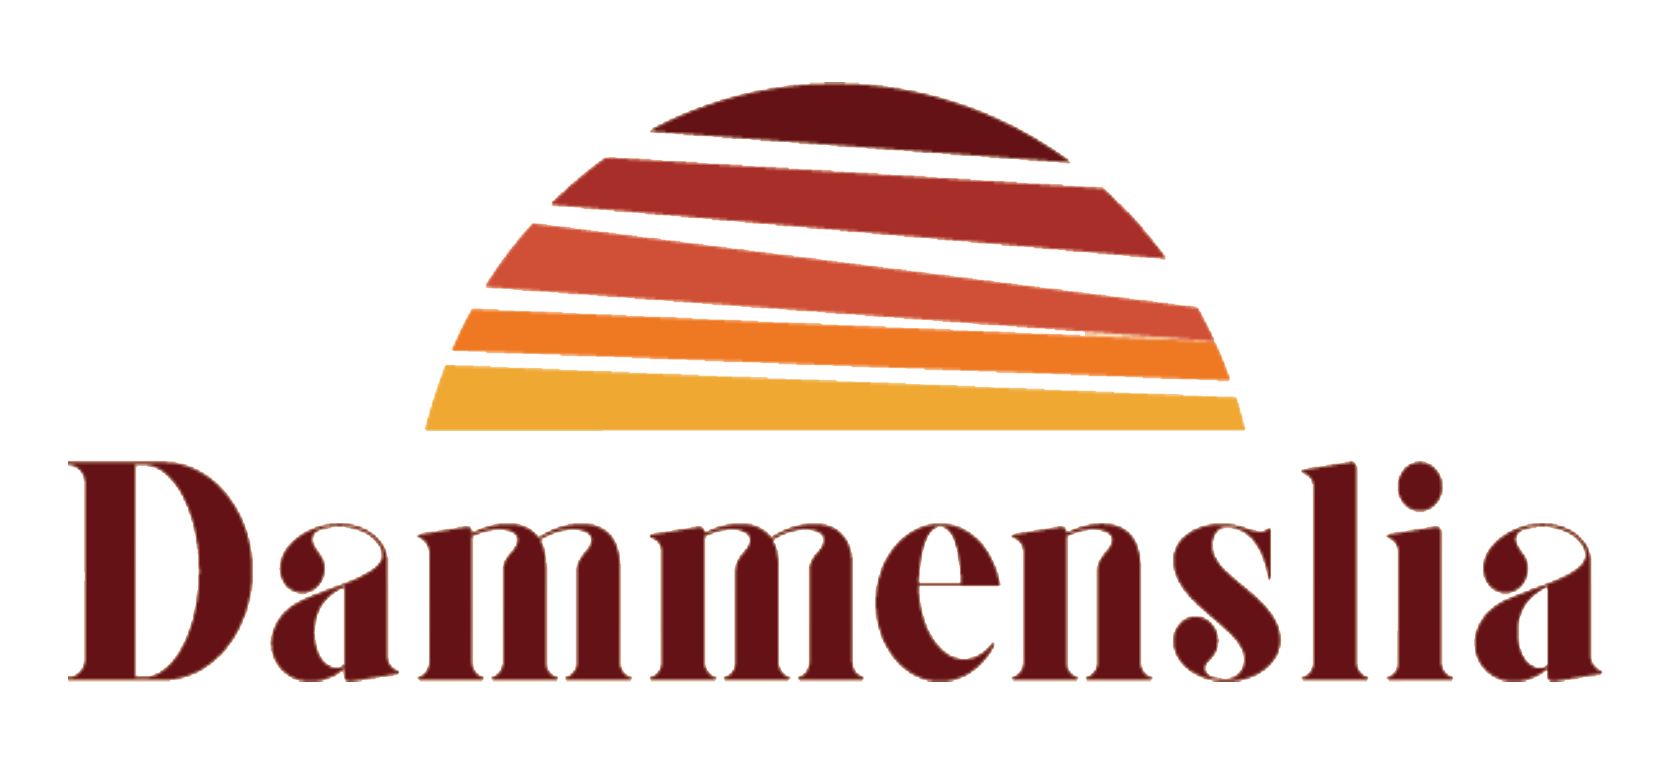 The logo for Dammenslia.